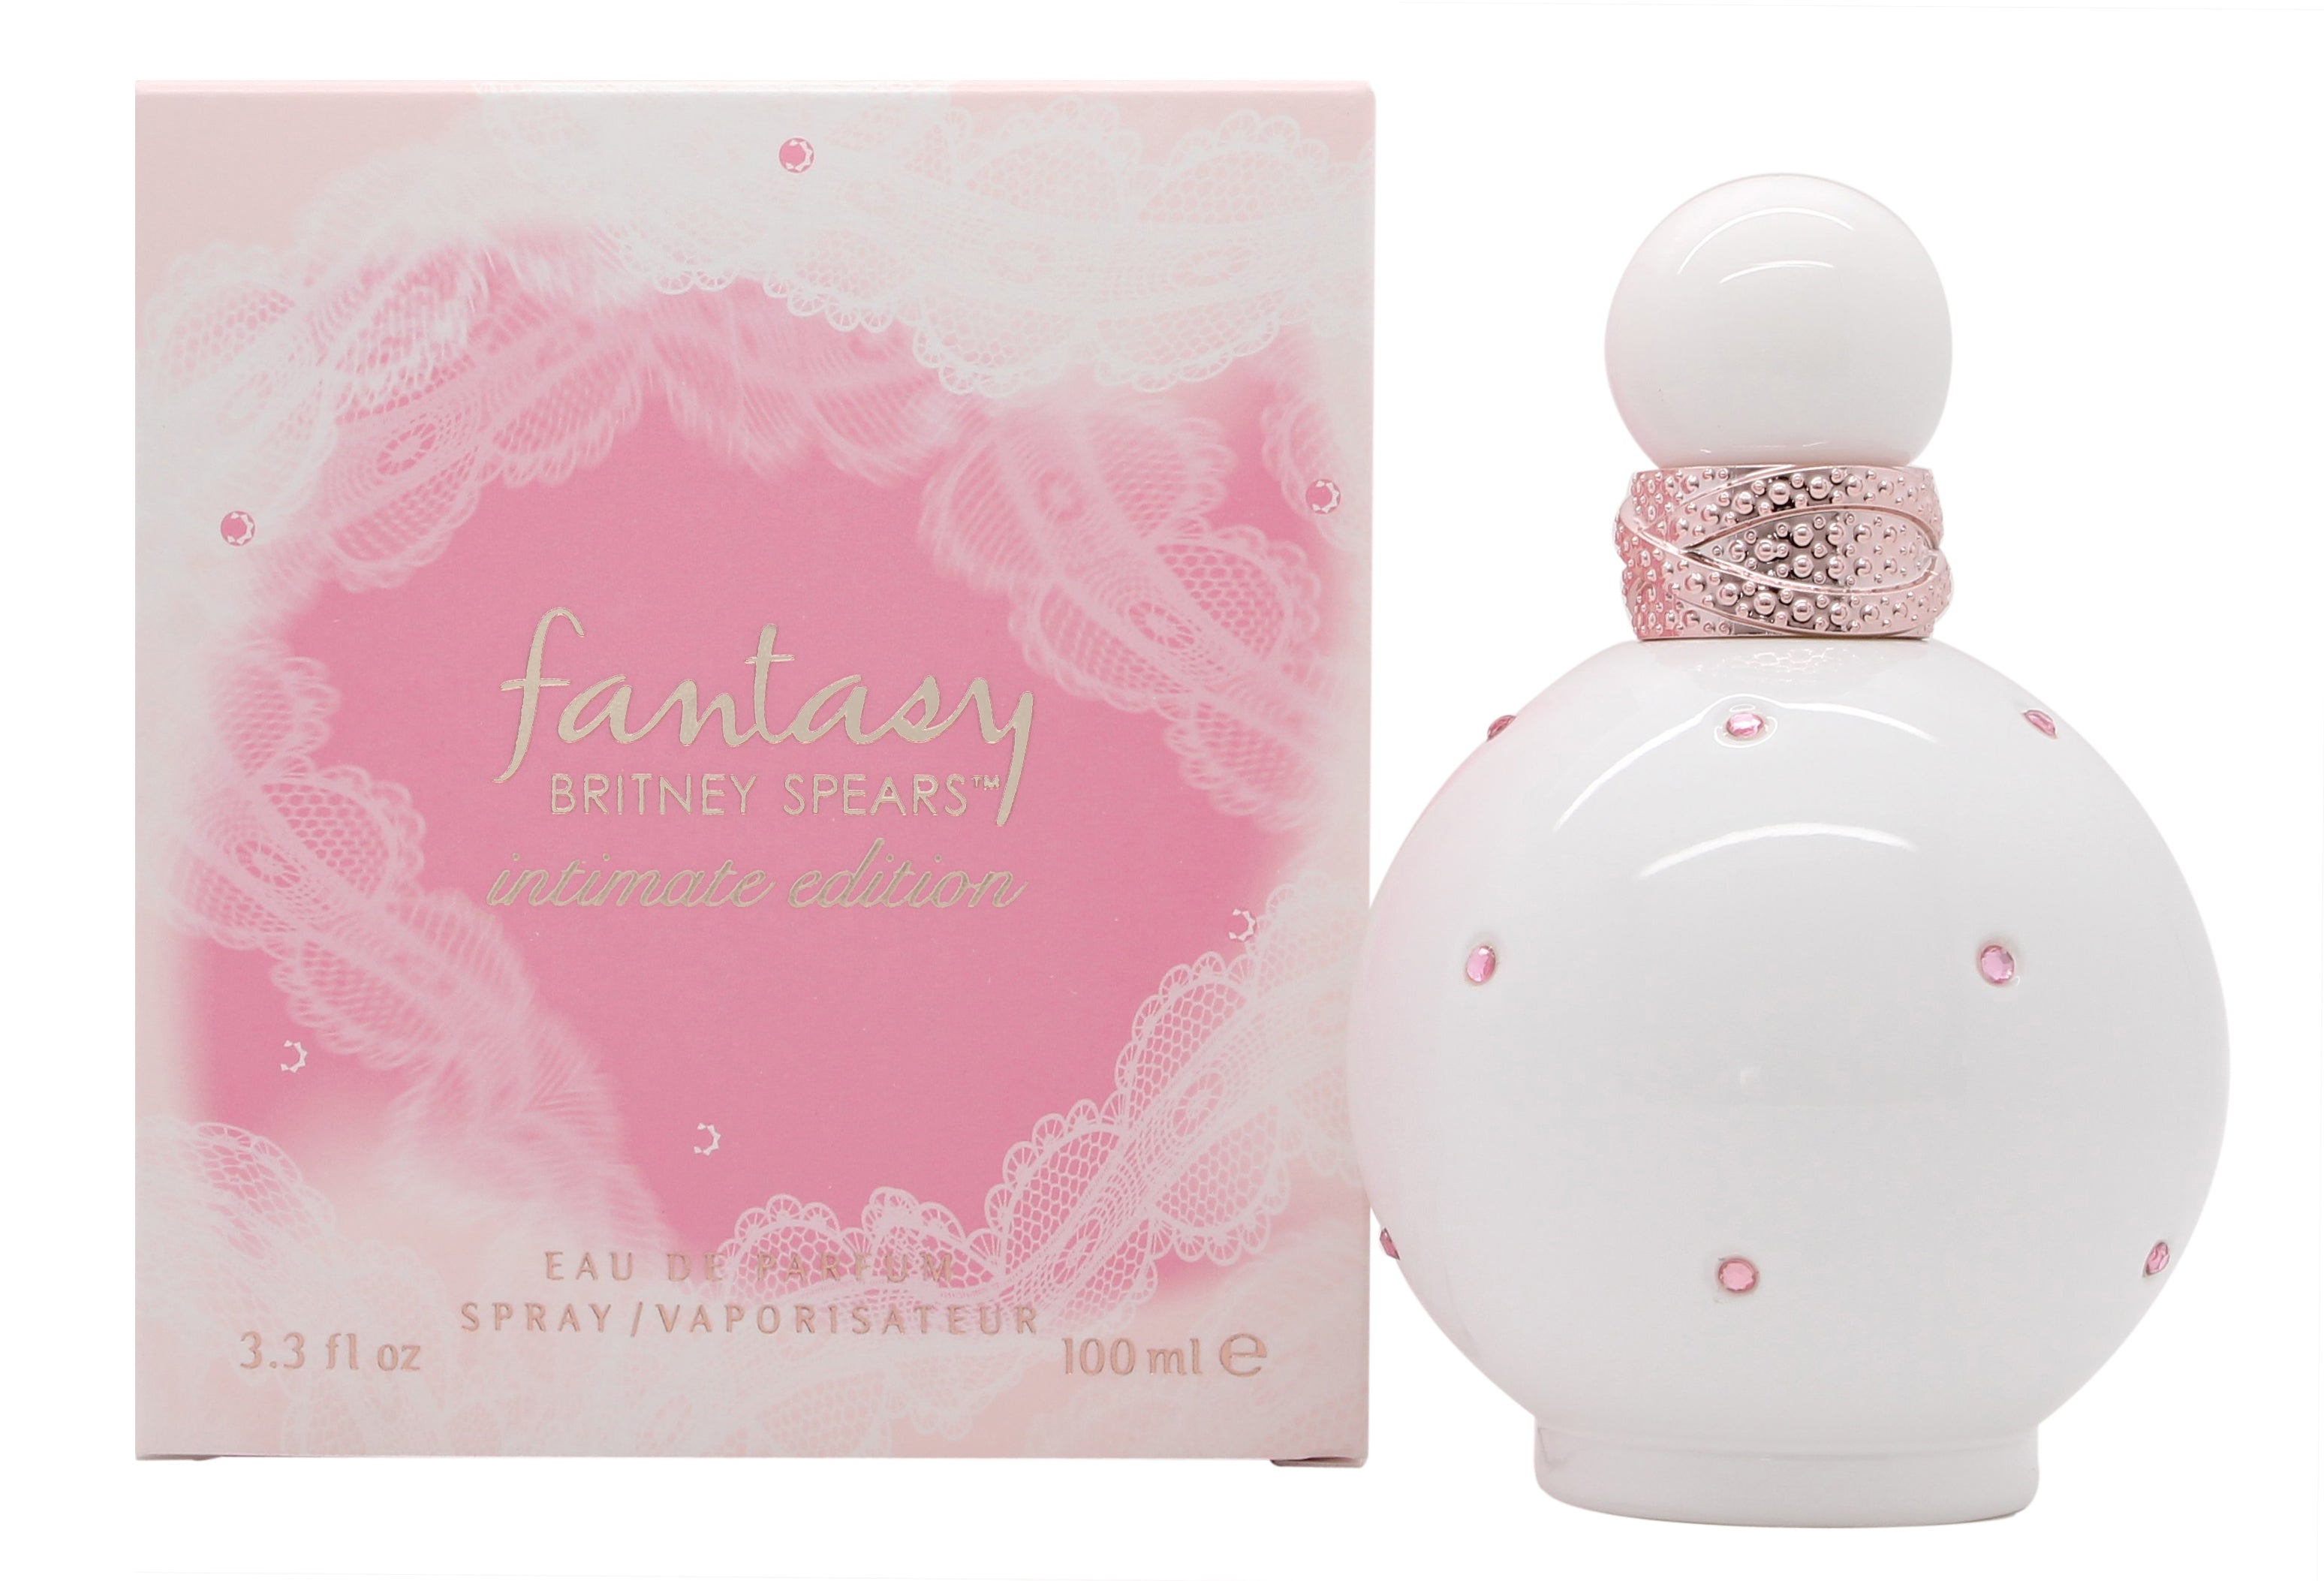 View Britney Spears Fantasy Intimate Edition Eau de Parfum 100ml Spray information